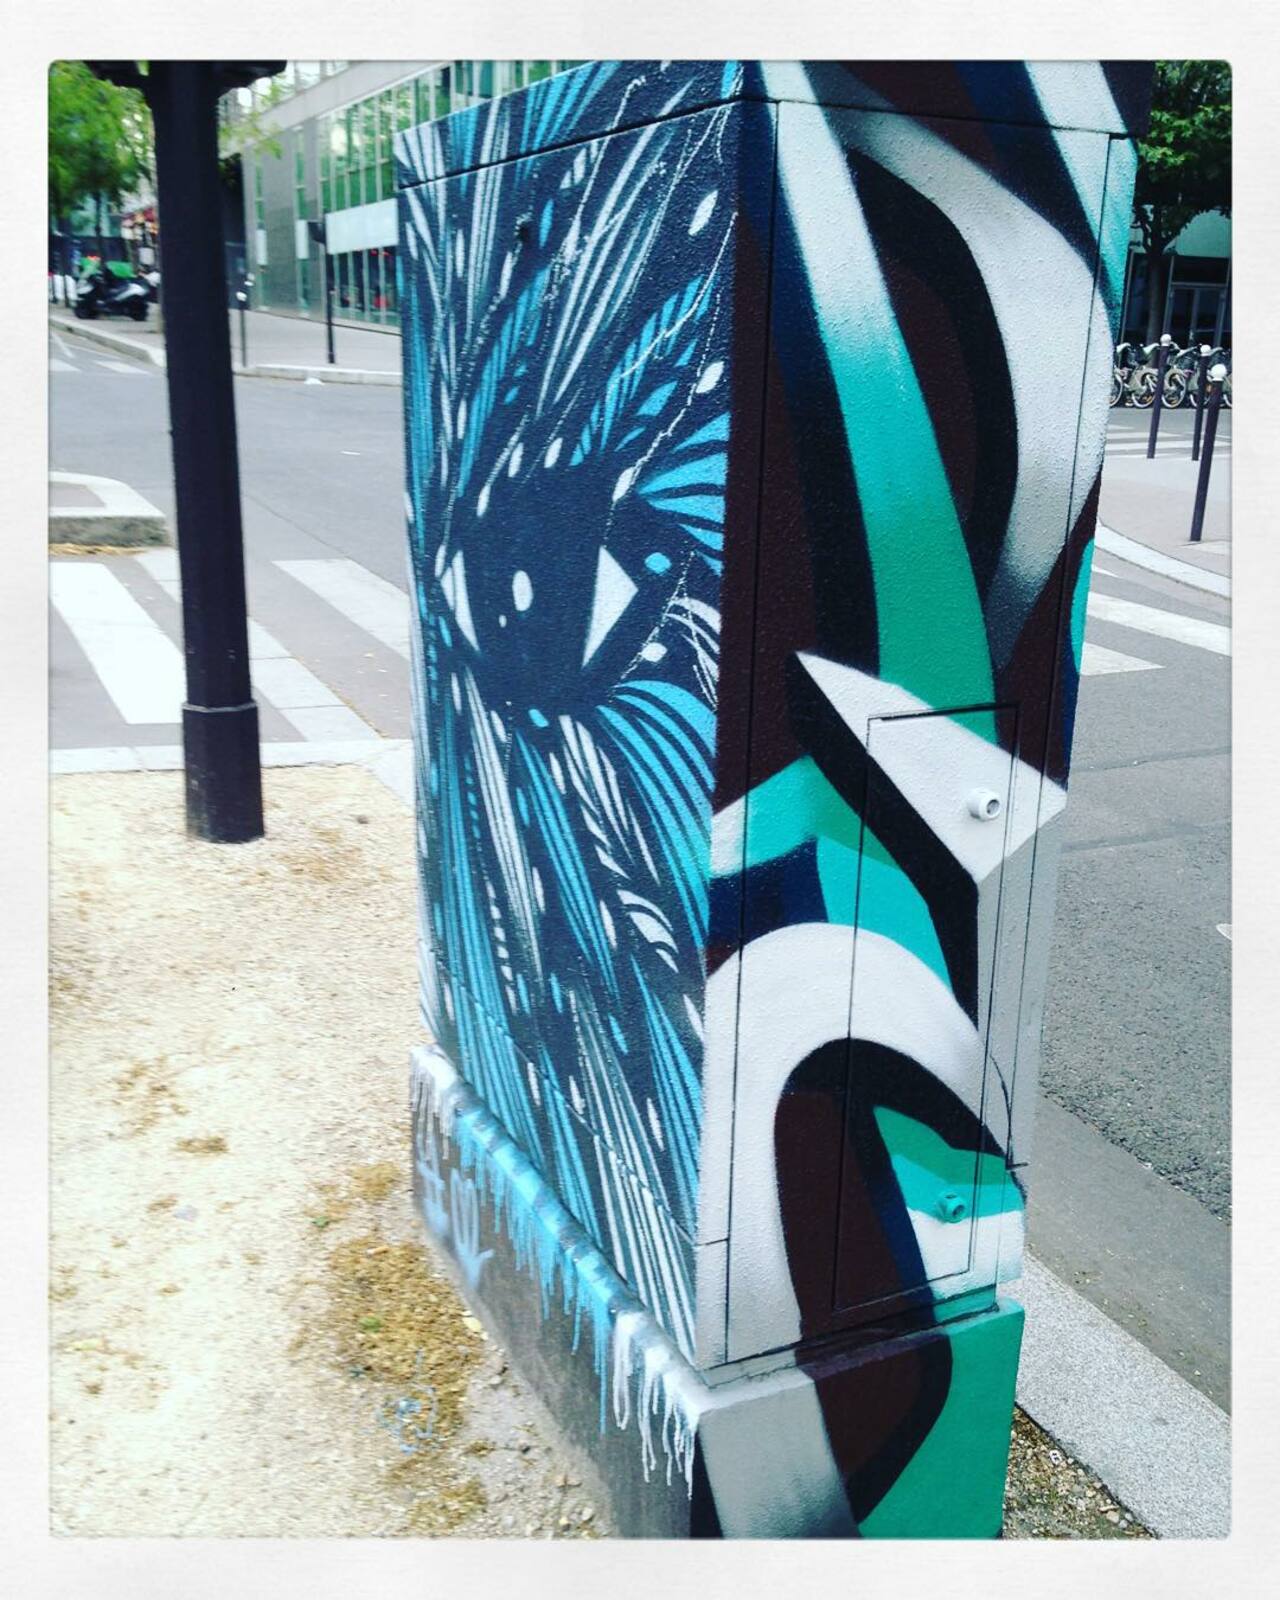 #Paris #graffiti photo by @cibti4987 http://ift.tt/206ppqX #StreetArt https://t.co/ZbV8400bDm